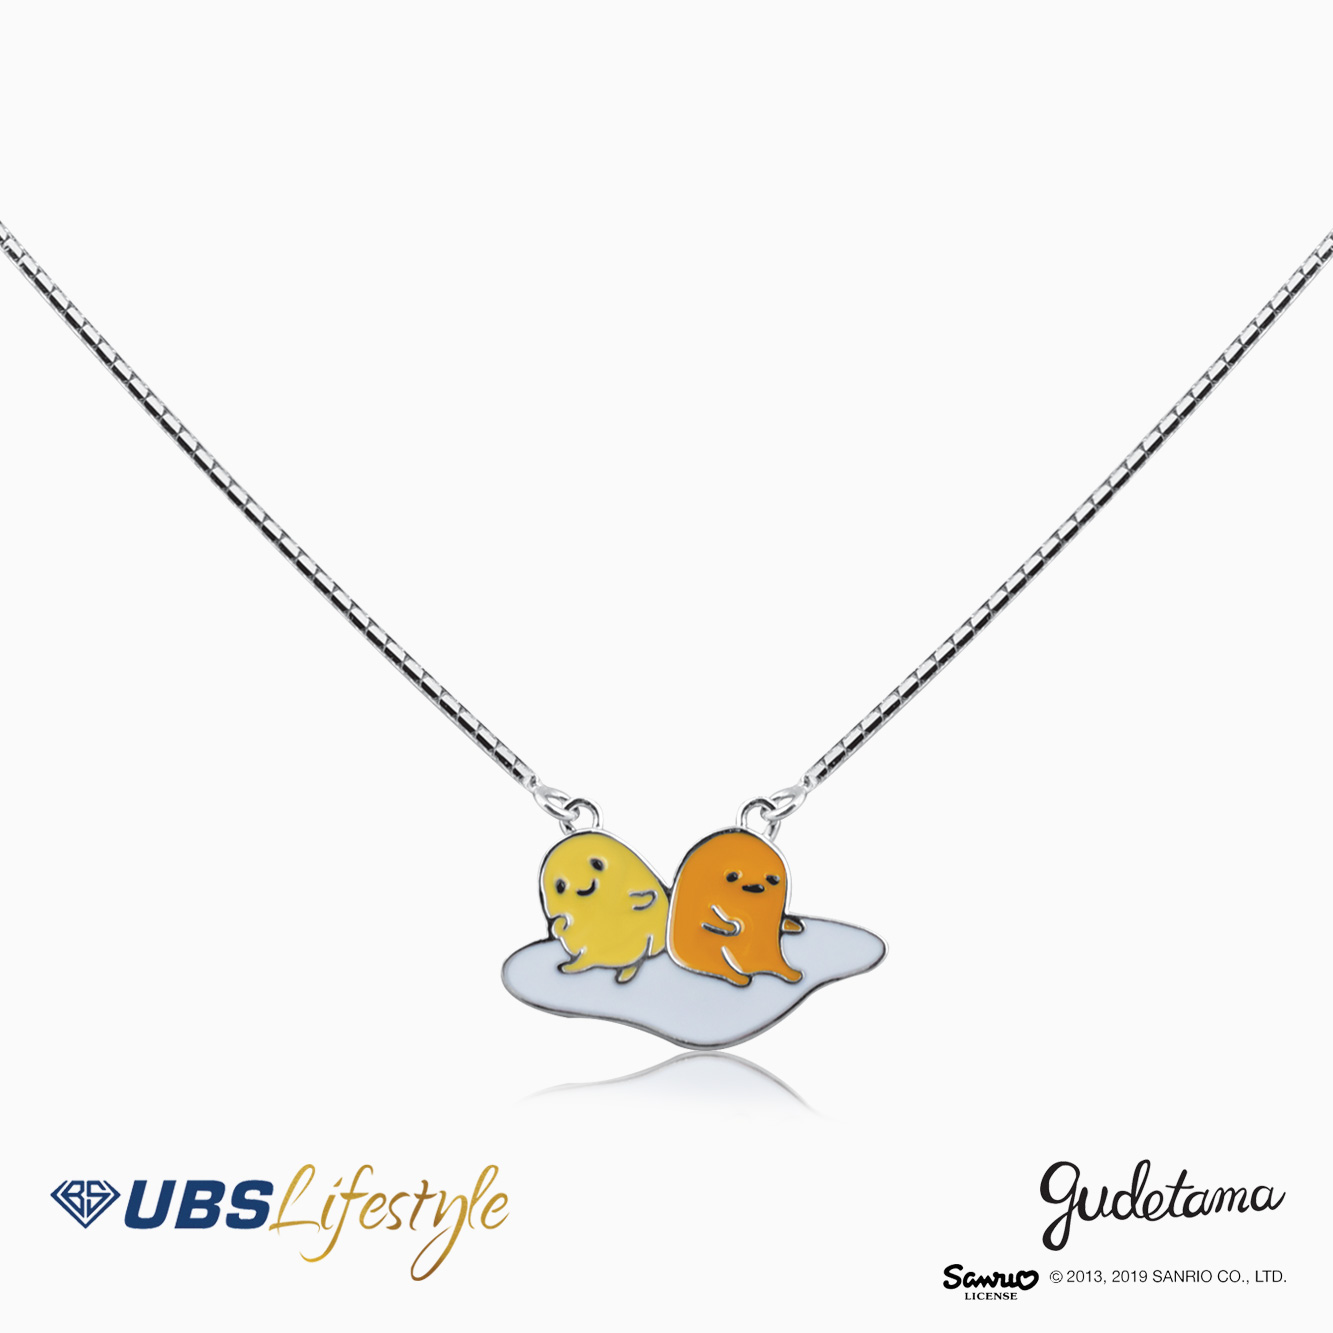 UBS Kalung Emas Anak Sanrio Gudetama - Kkz0085 - 17K